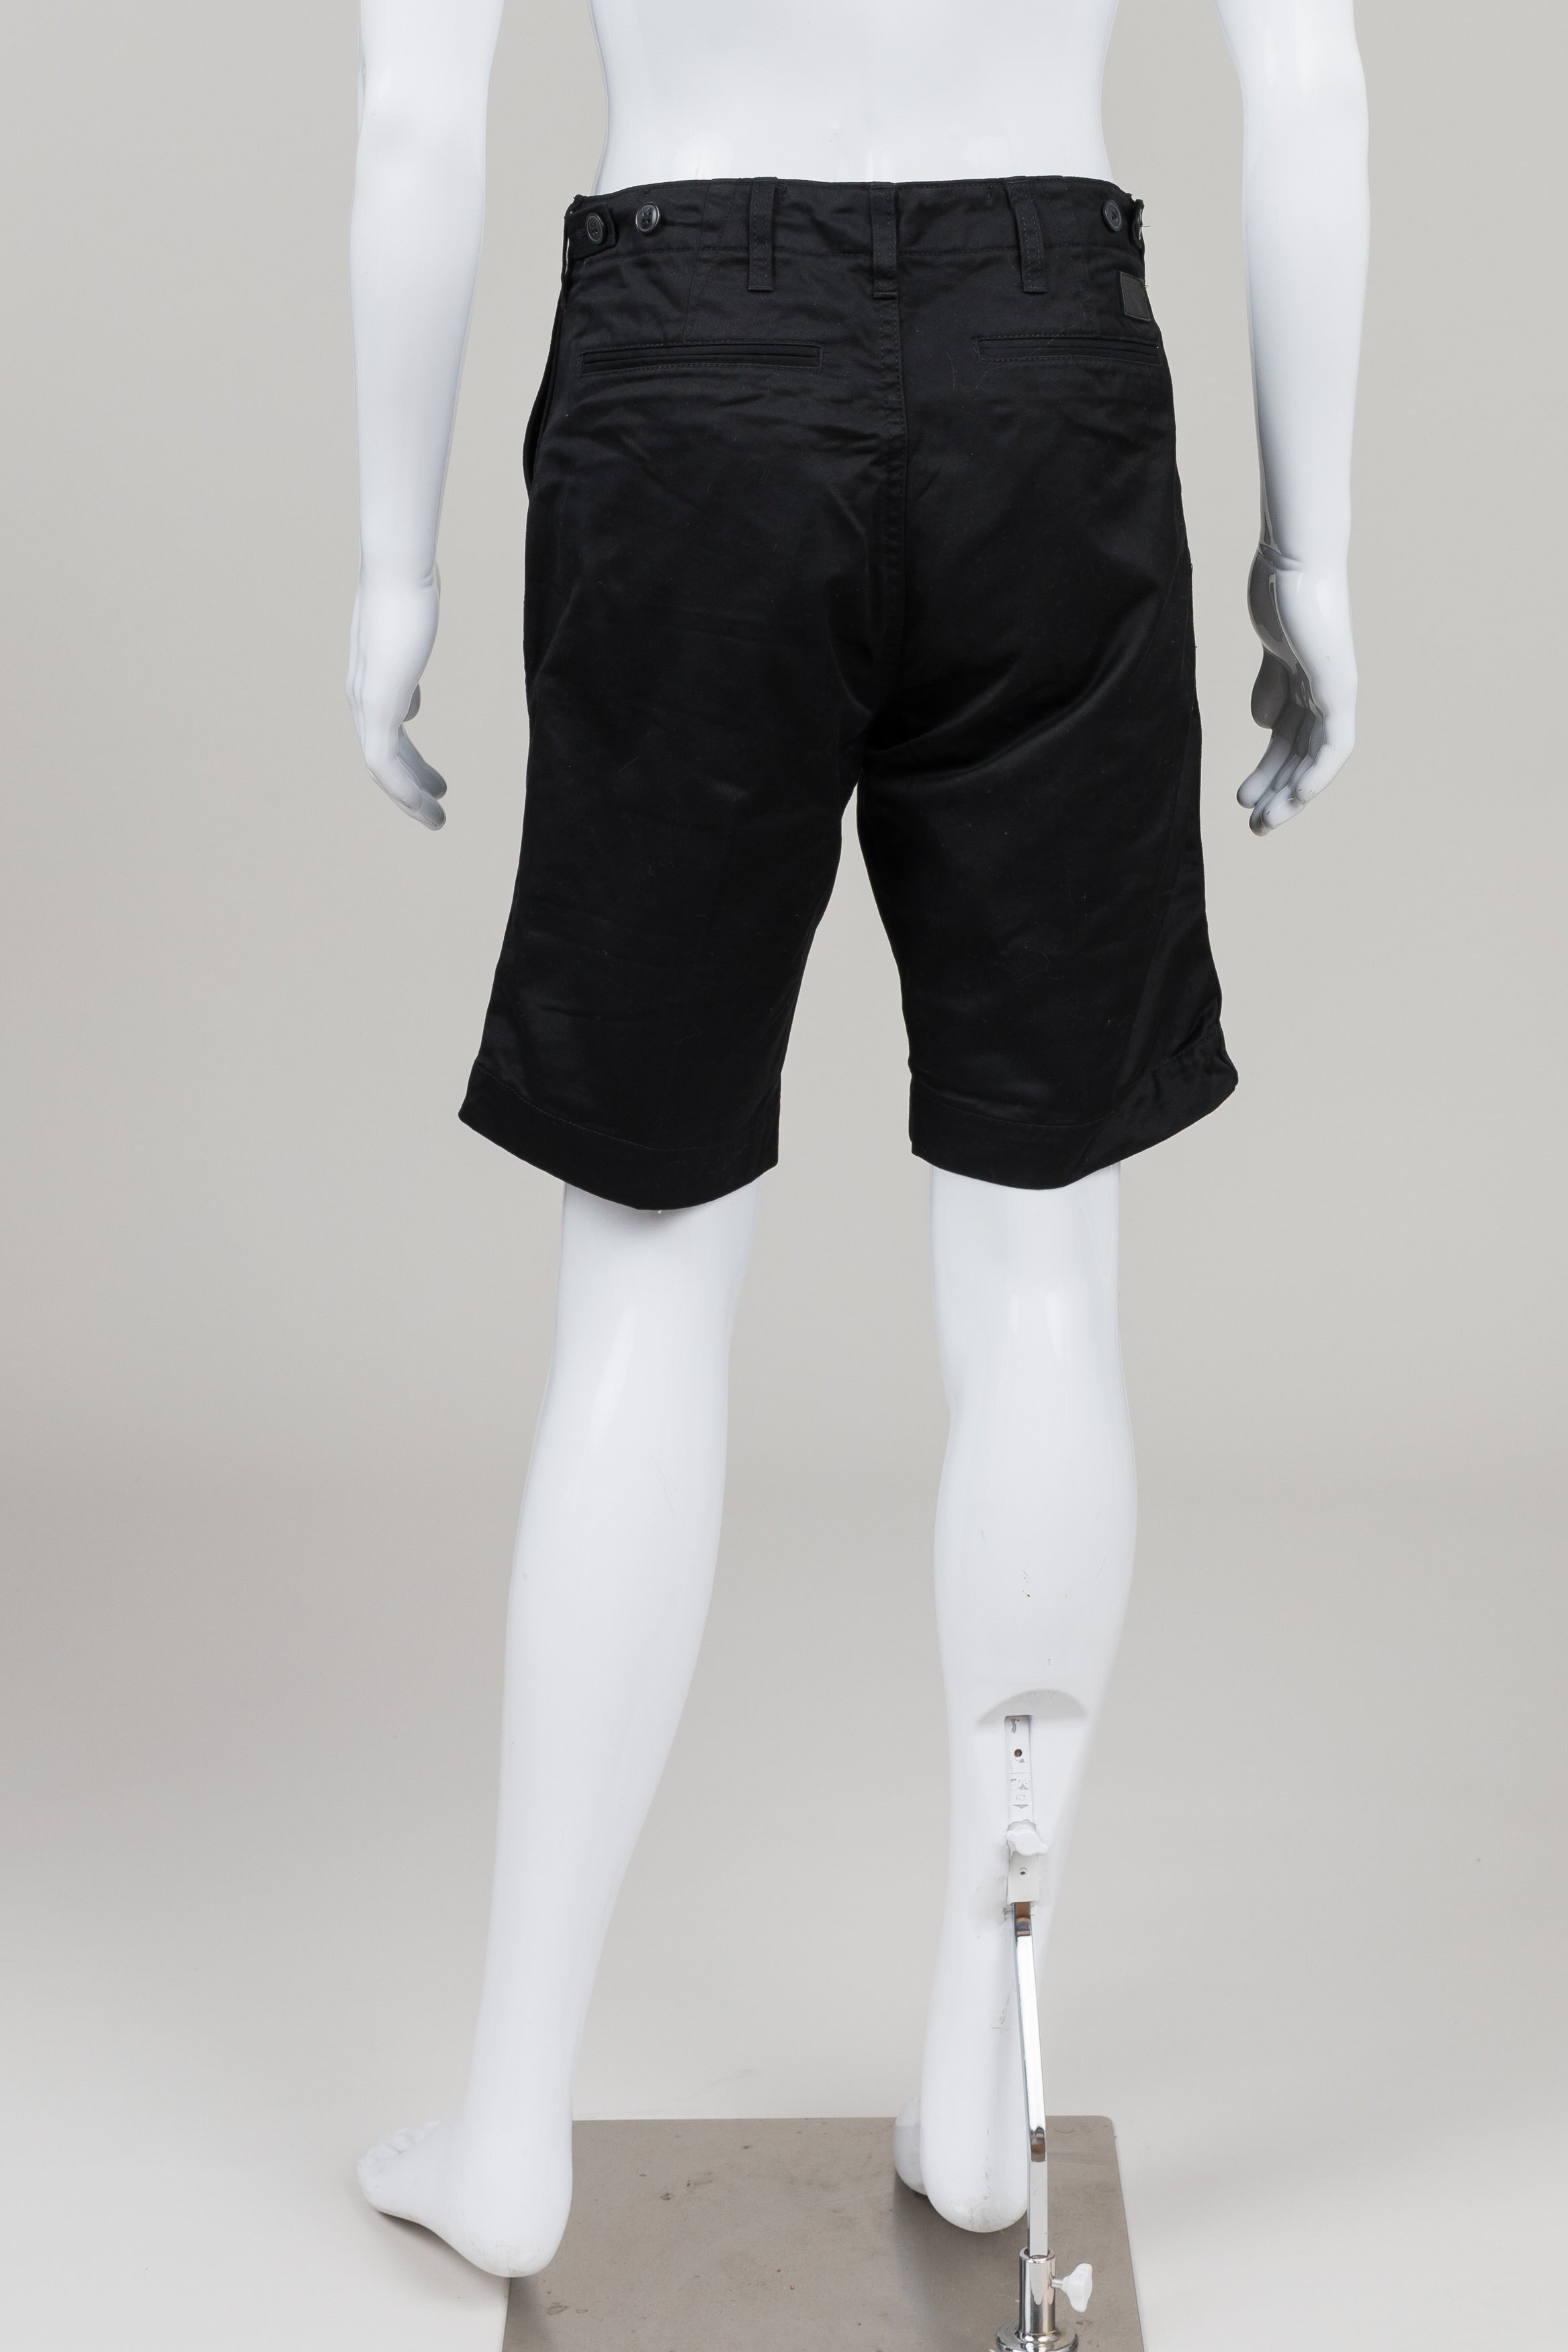 Black Chocolate Black Shorts (M) *New w/ tags $299